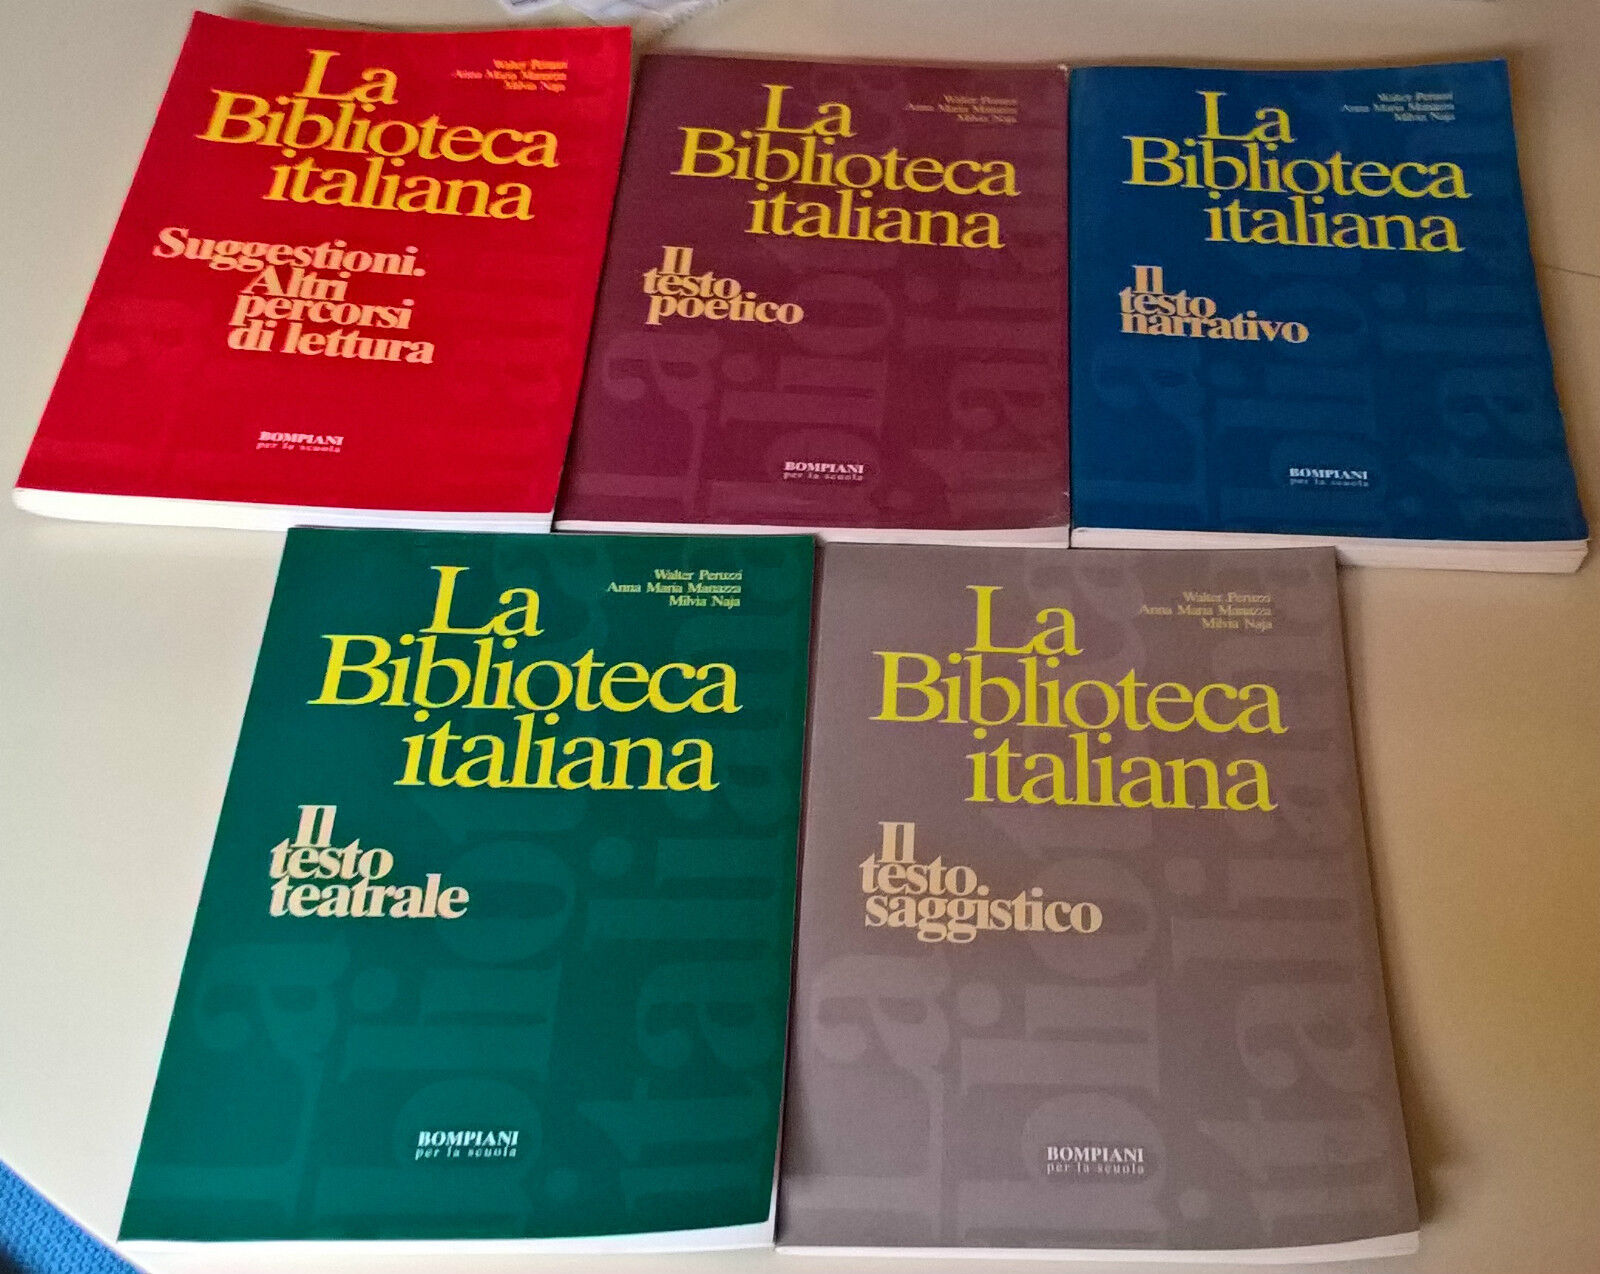 5 Voll. La Biblioteca italiana - Peruzzi, Manazza, Naja - Bompiani, 1996 - L